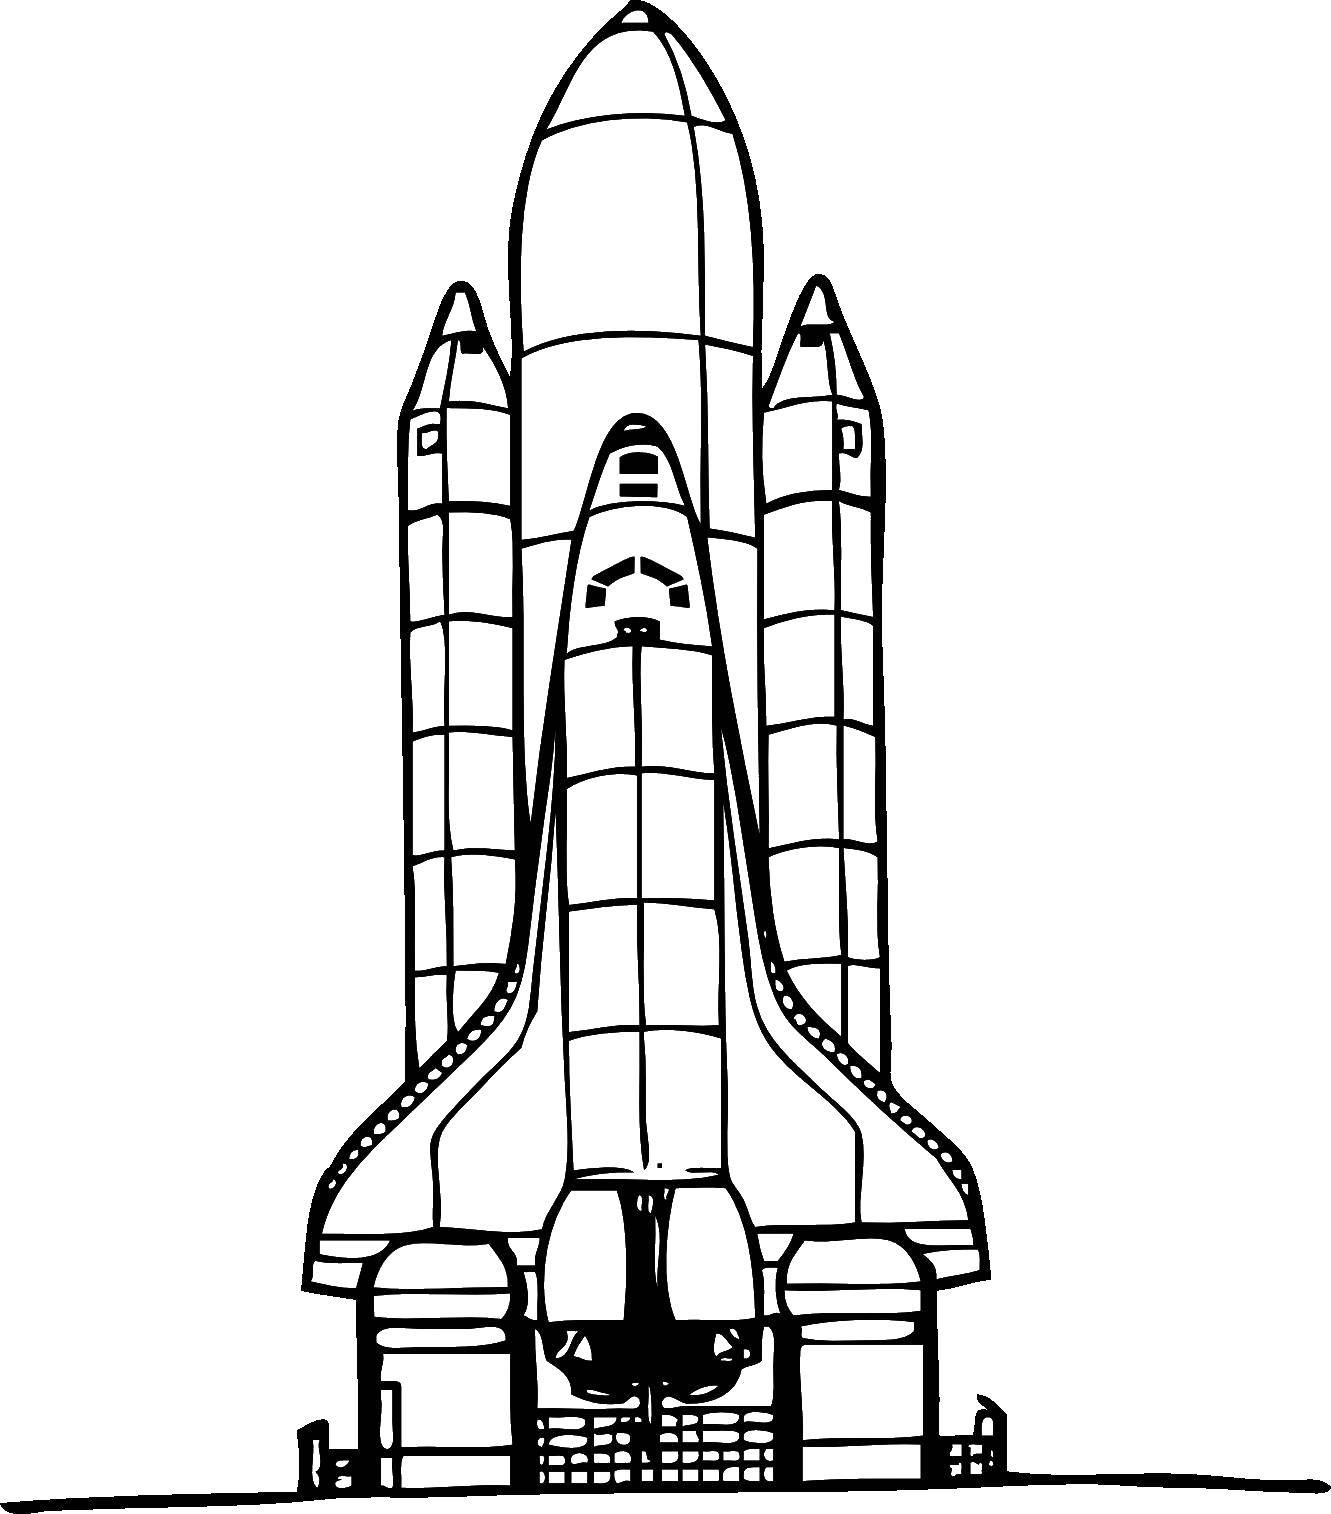 Название: Раскраска Ракета. Категория: Космос. Теги: космос, ракета.